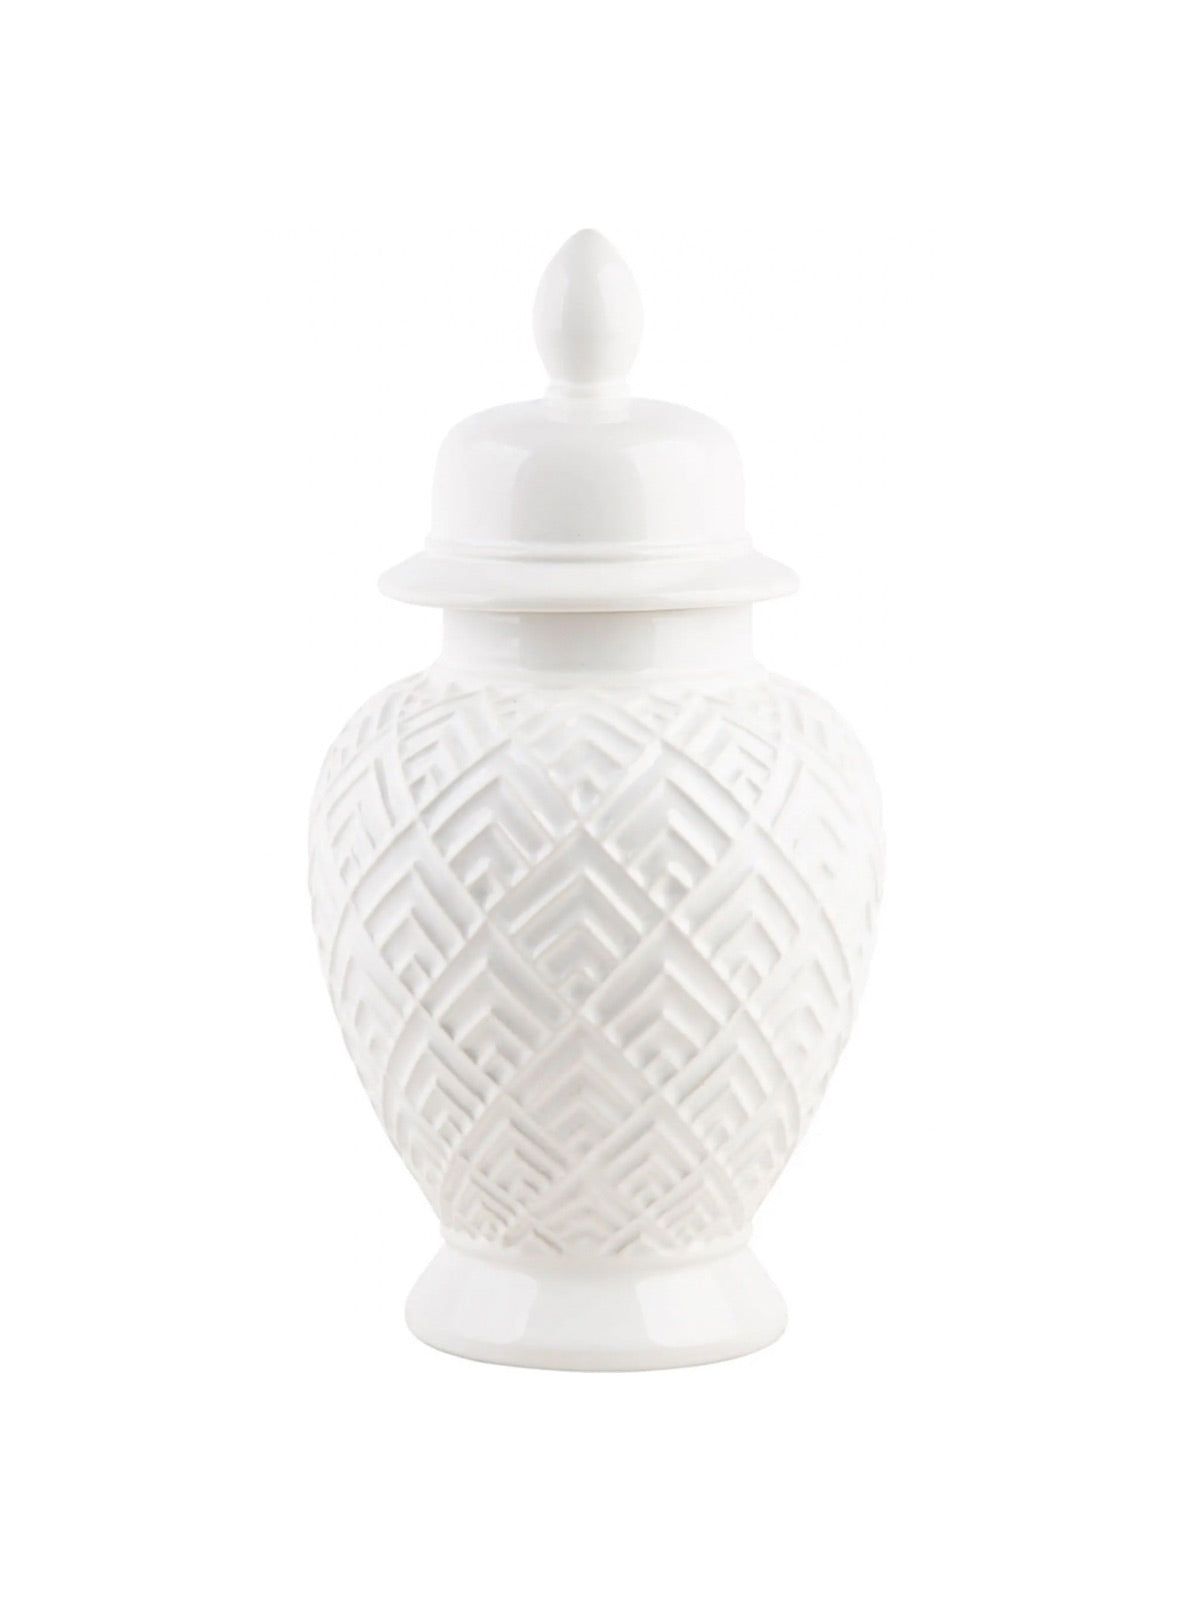 White Geometric Ginger Jar with Diamond Patterns - 12.5in | Walmart (US)